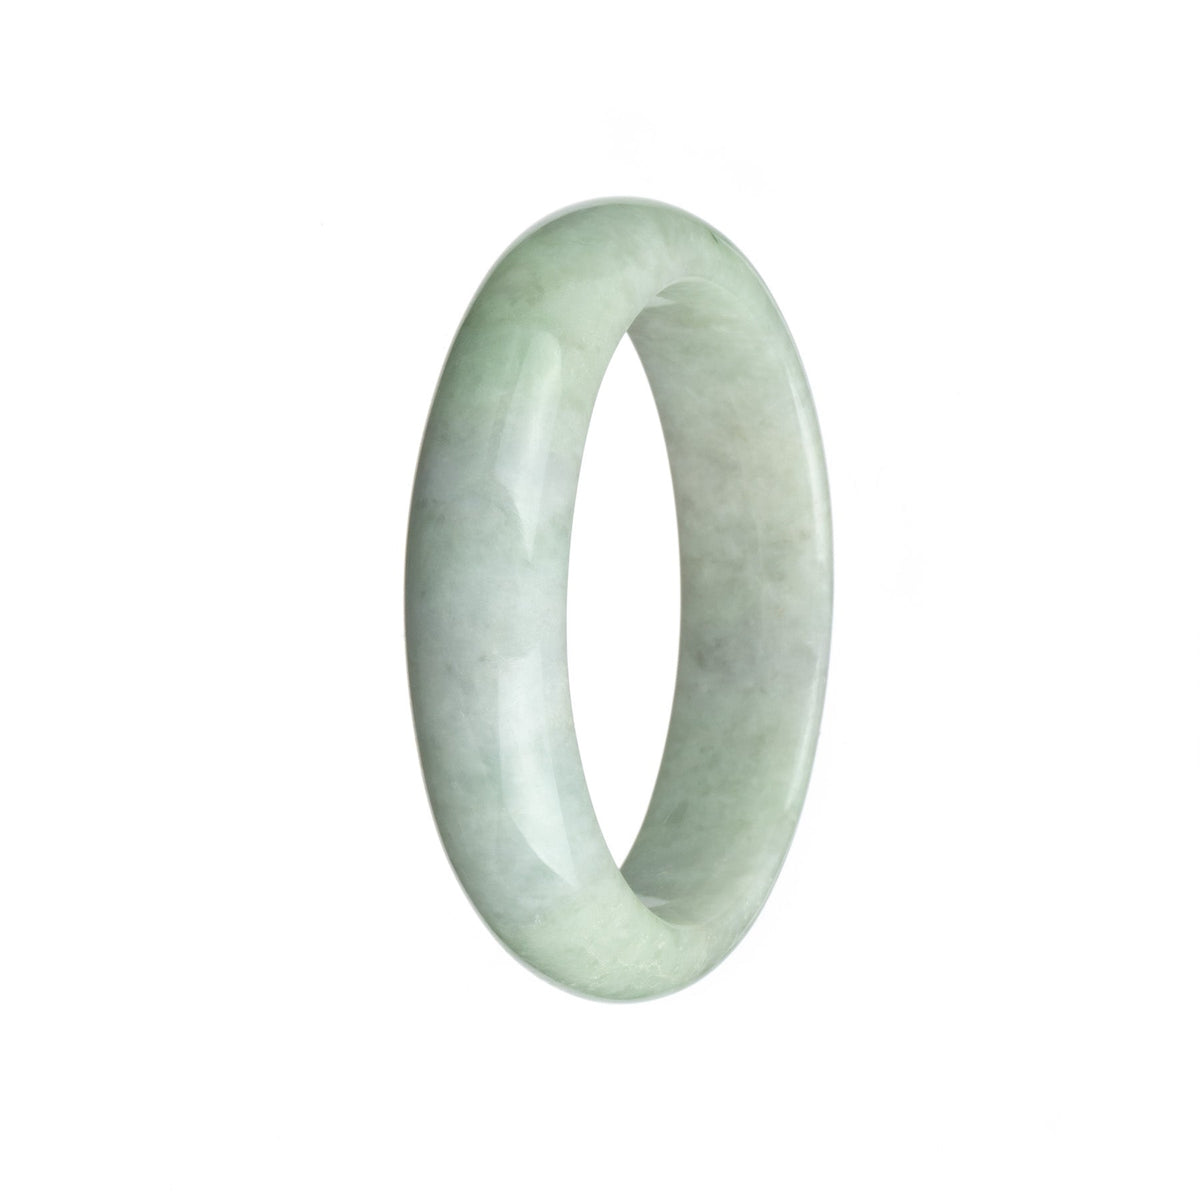 Genuine Untreated White and Pale Green Jadeite Jade Bangle Bracelet - 59mm Half Moon